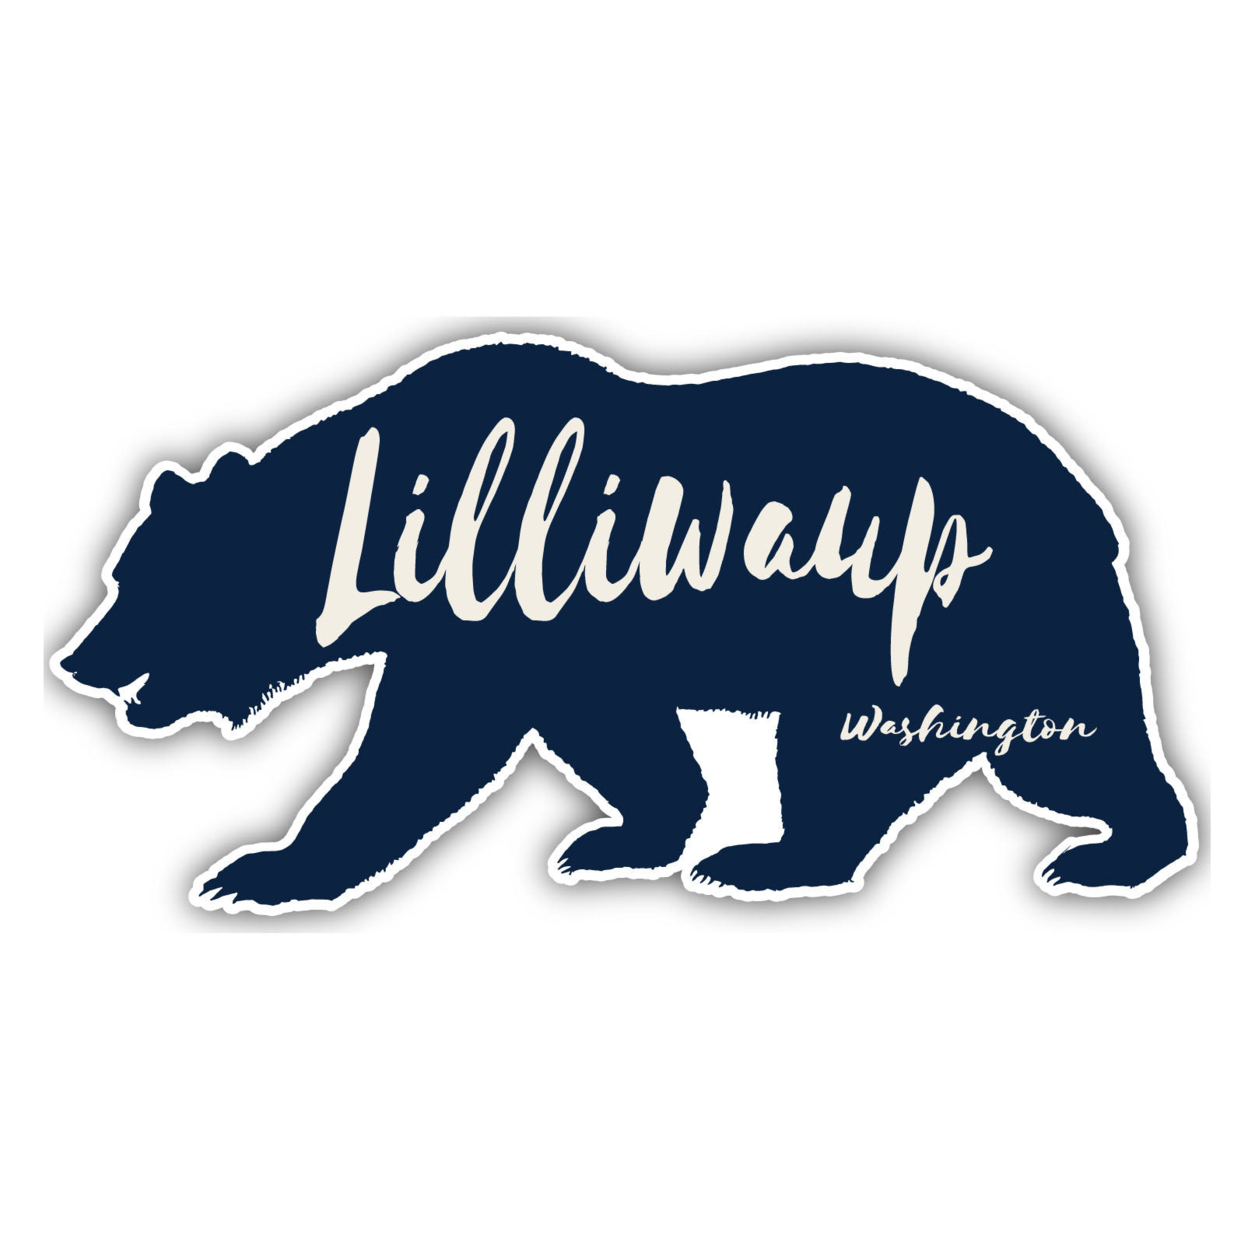 Lilliwaup Washington Souvenir Decorative Stickers (Choose Theme And Size) - 2-Inch, Bear